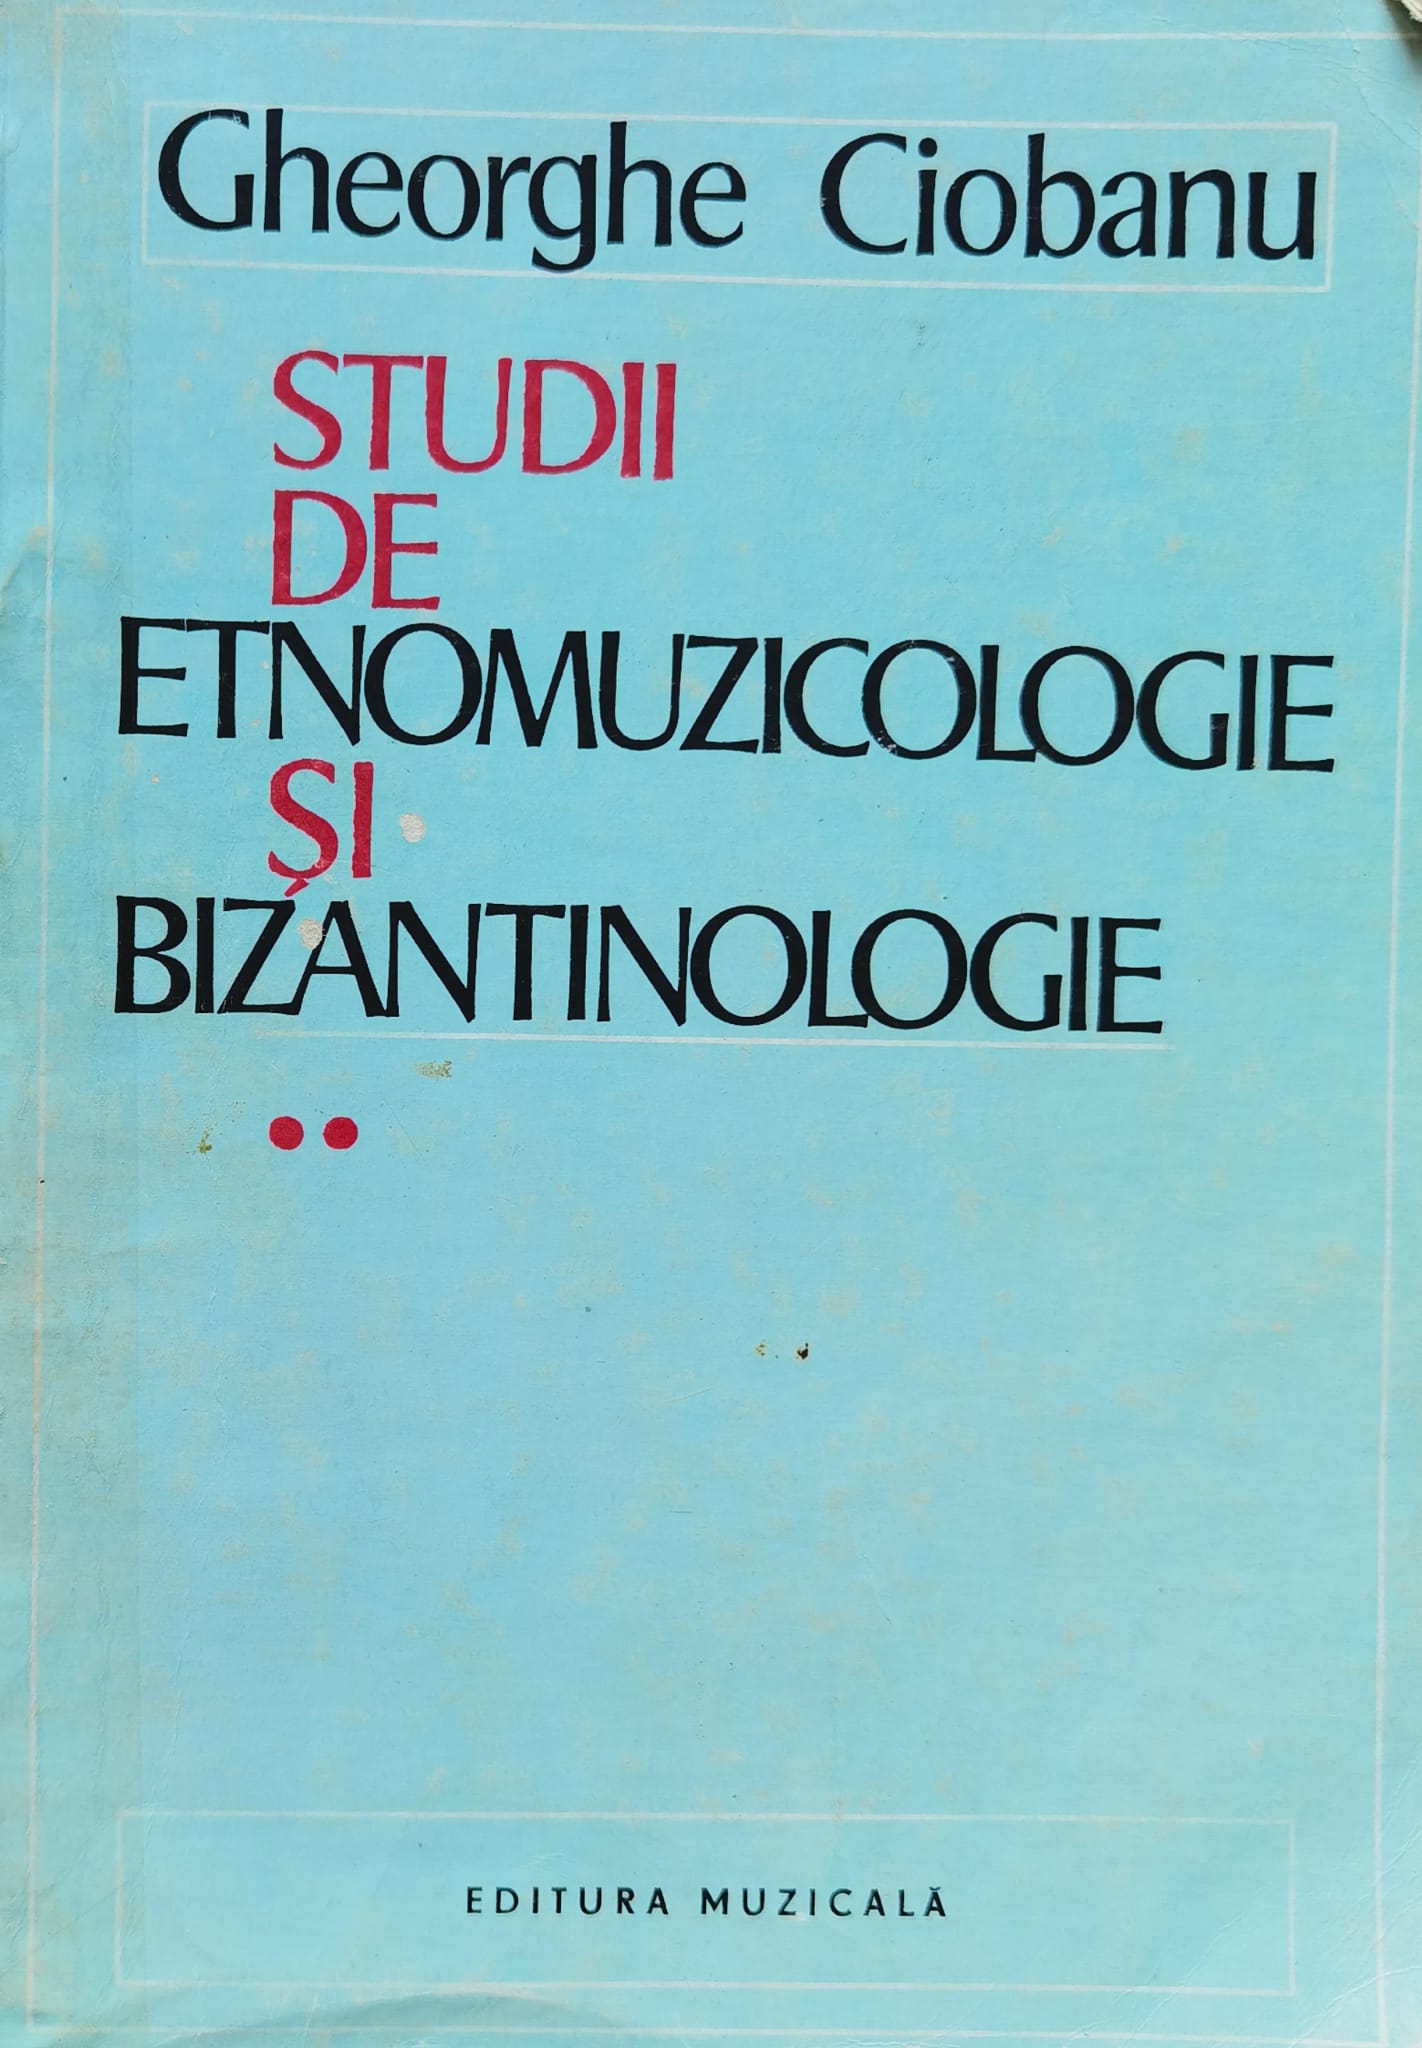 studii de etnomuzicologie si bizantinologie vol. 2                                                   gheorghe ciobanu                                                                                    